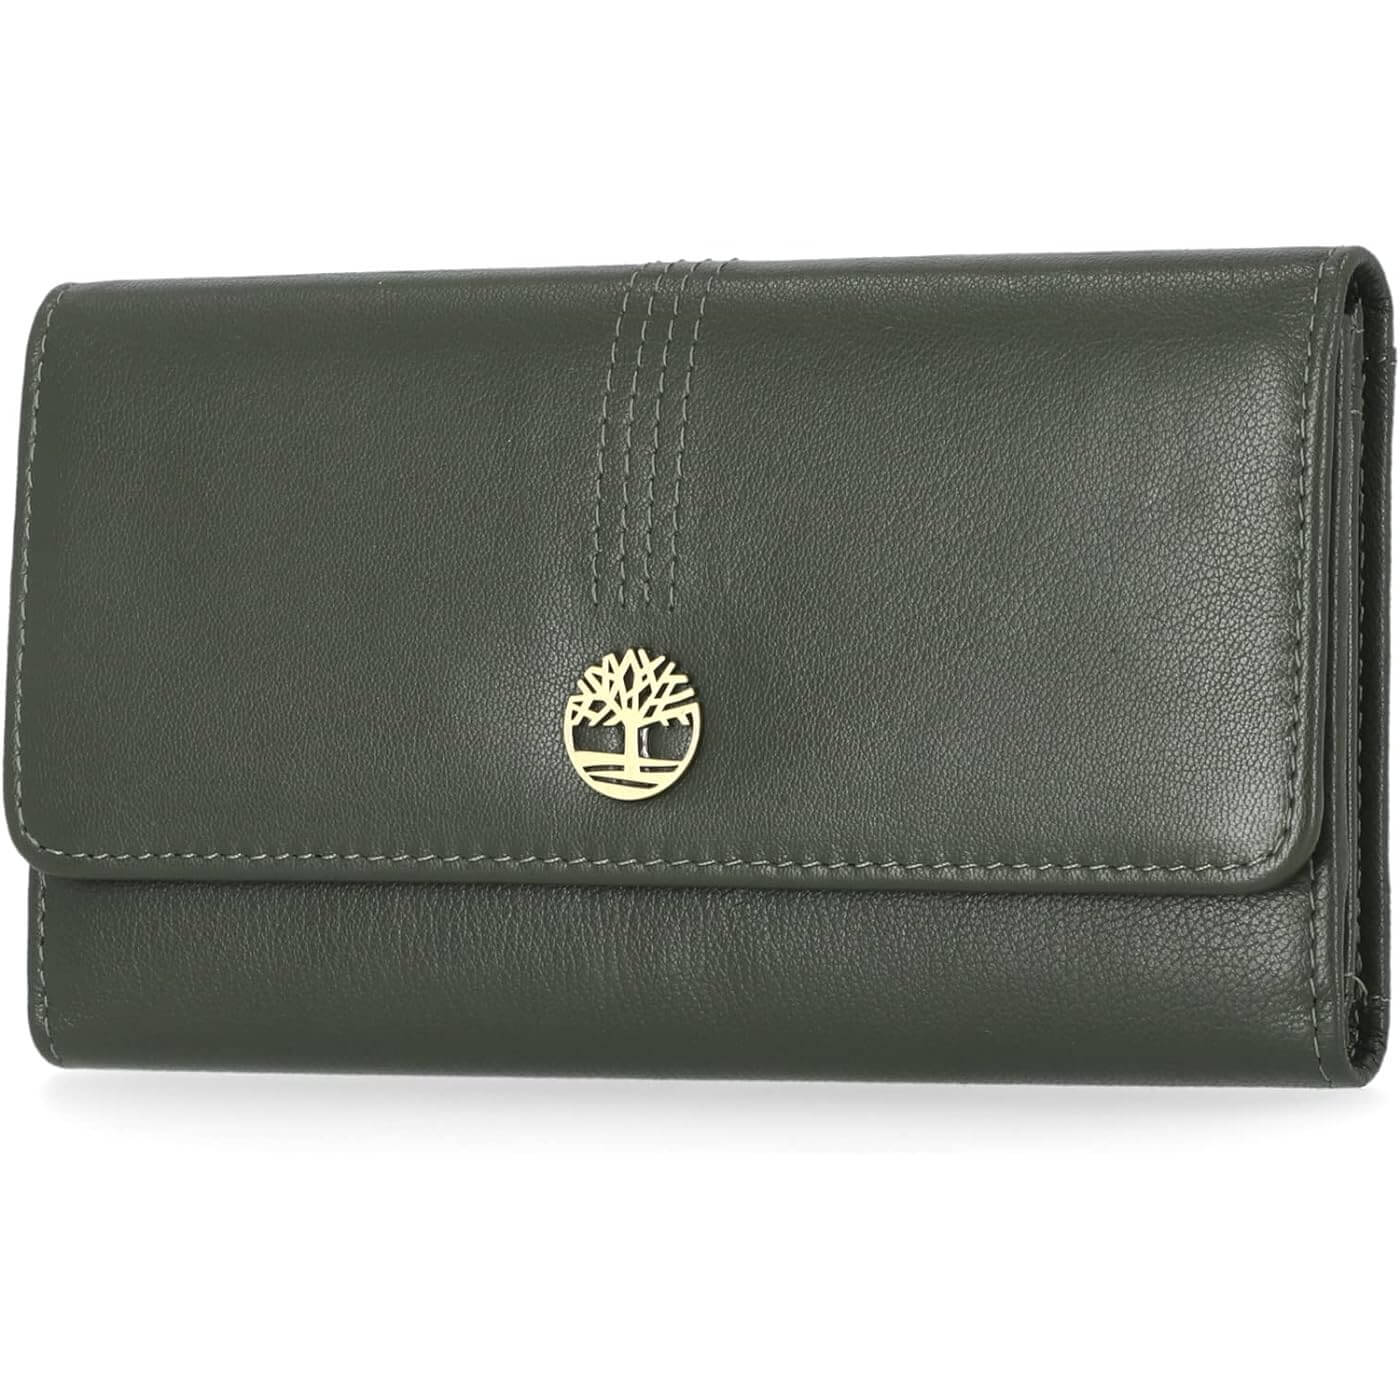 Кожаный кошелек-клатч Timberland RFID Flap Organizer, серо-зеленый кошелек кожаный женский lison kaoberg k 9102